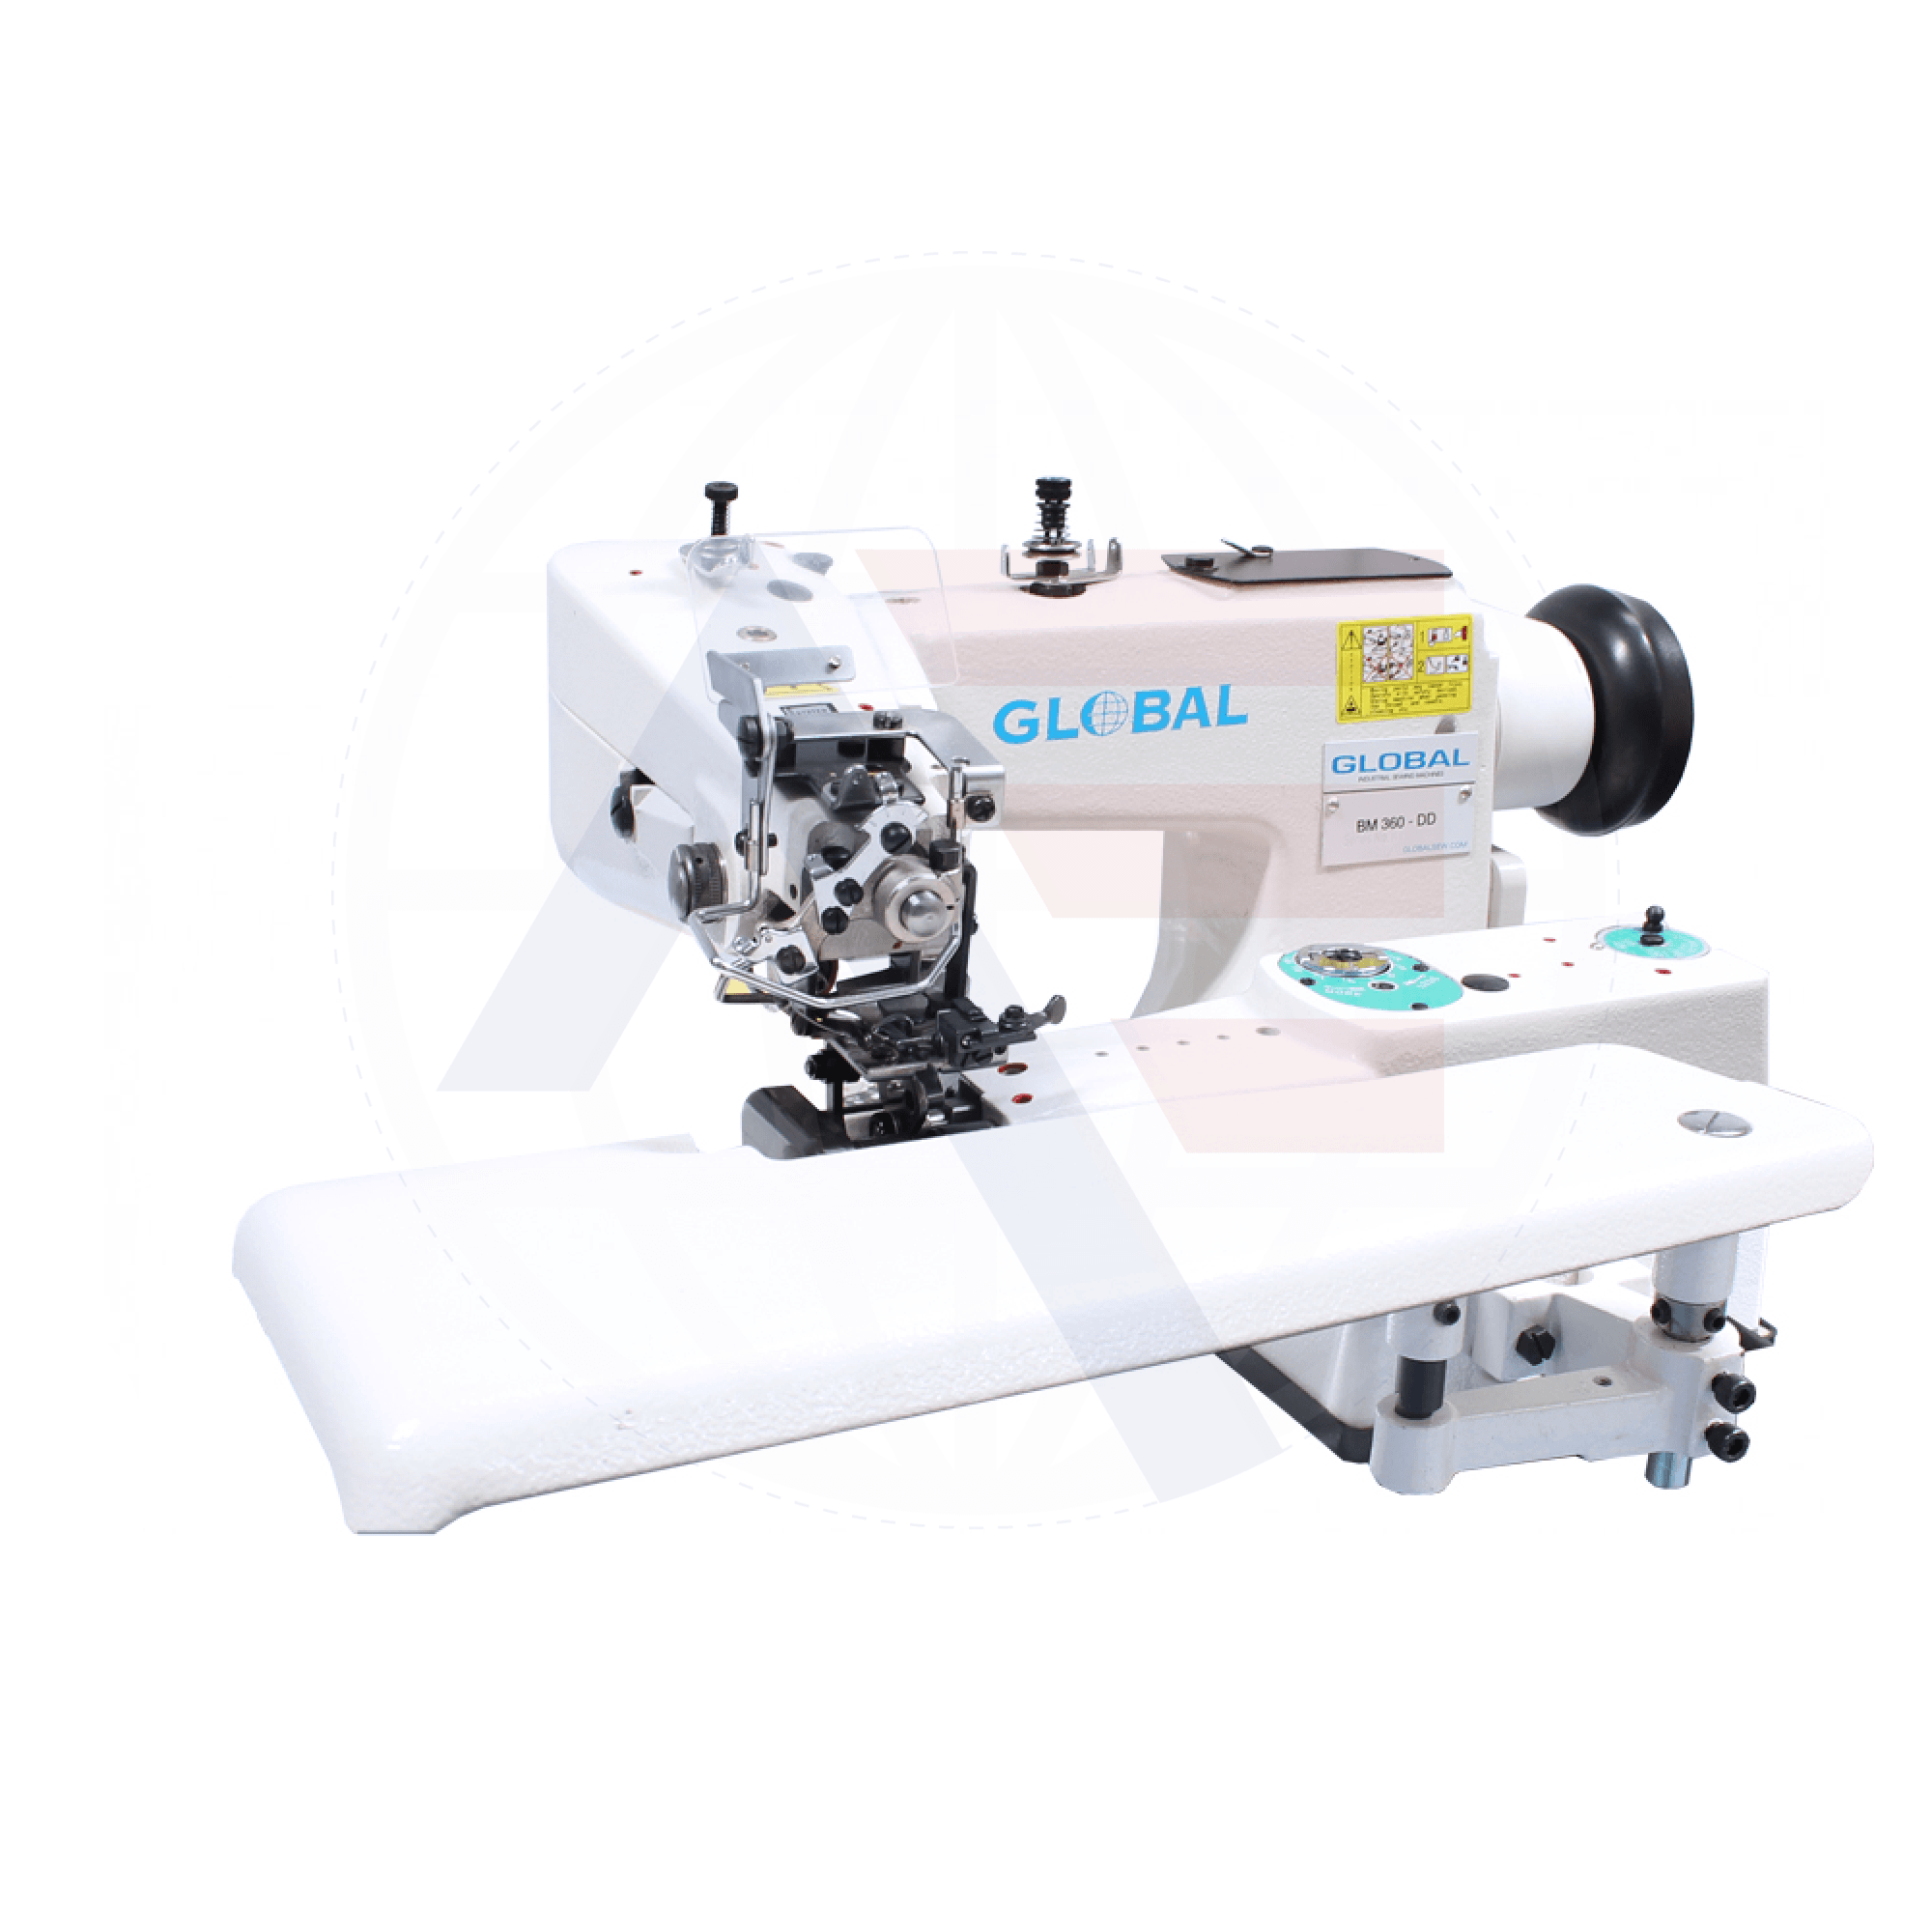 Global Bm 360 Dd Blindstitch Machine Sewing Machines